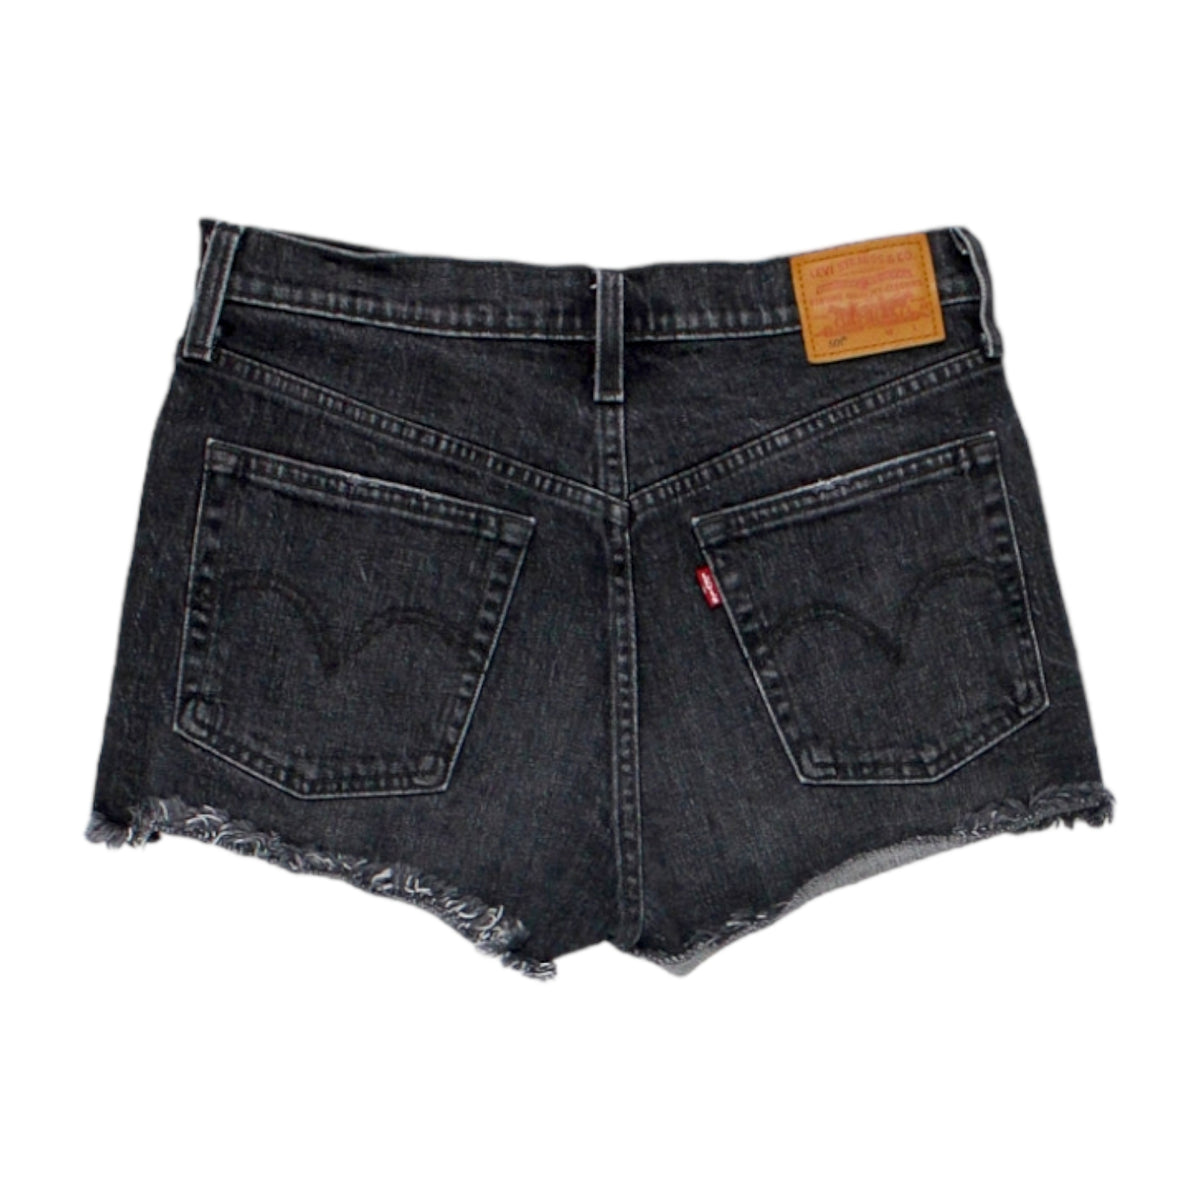 Levi's 501 Black Denim Cut-Off Shorts